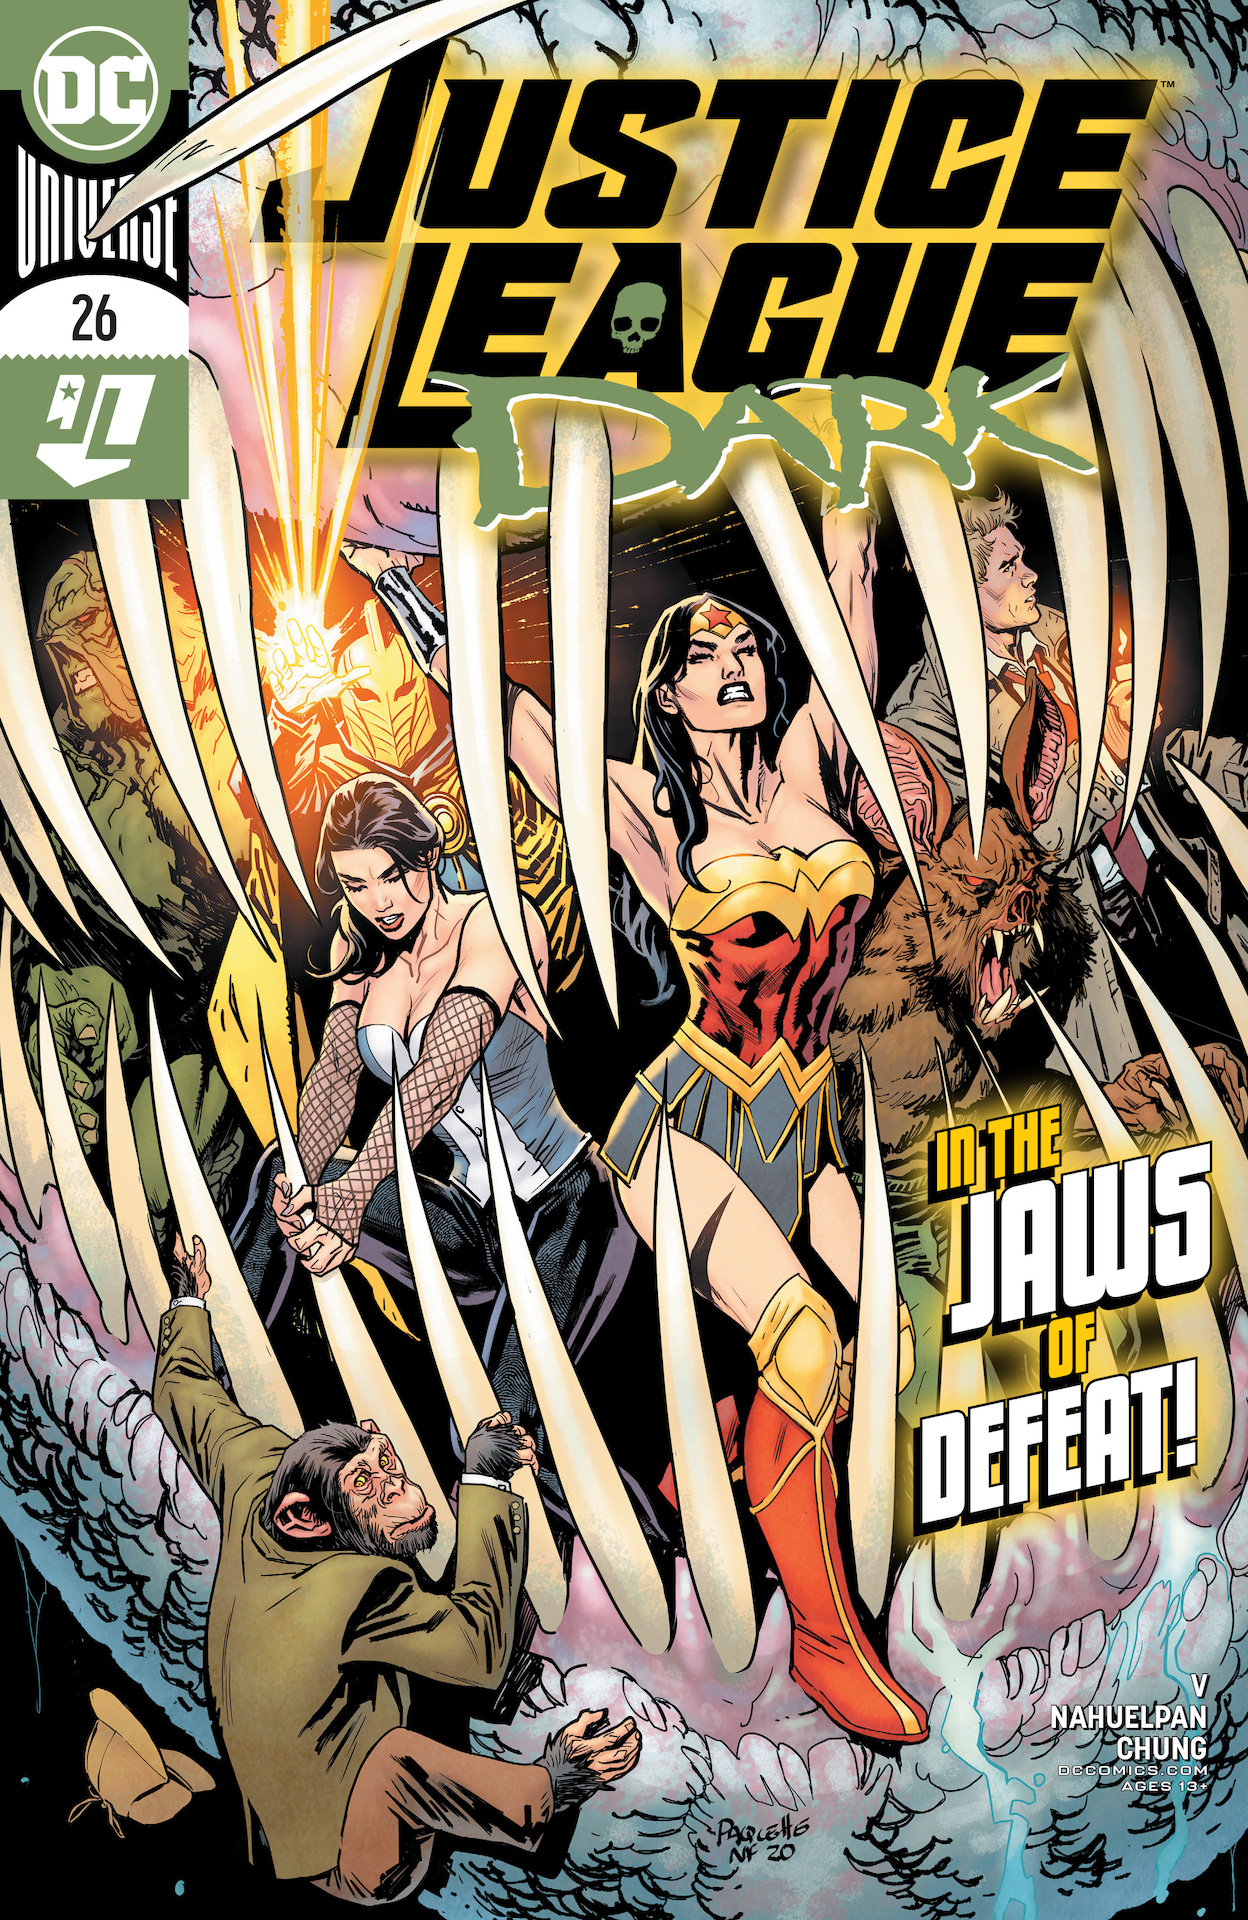 DC Preview: Justice League Dark #26